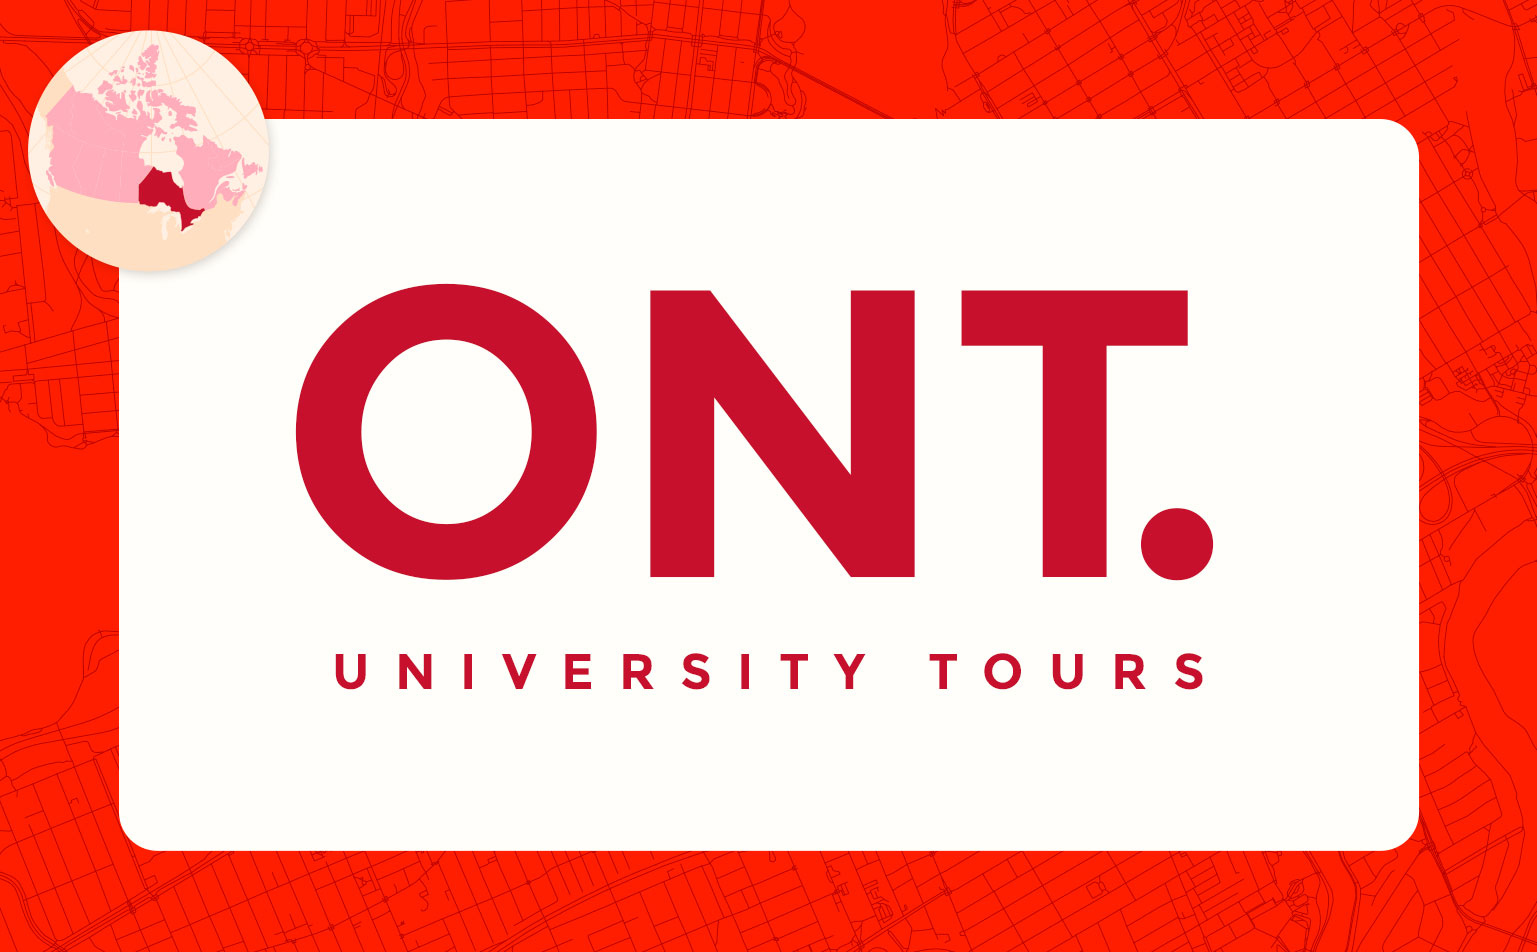 virtual campus university tours in Ontario